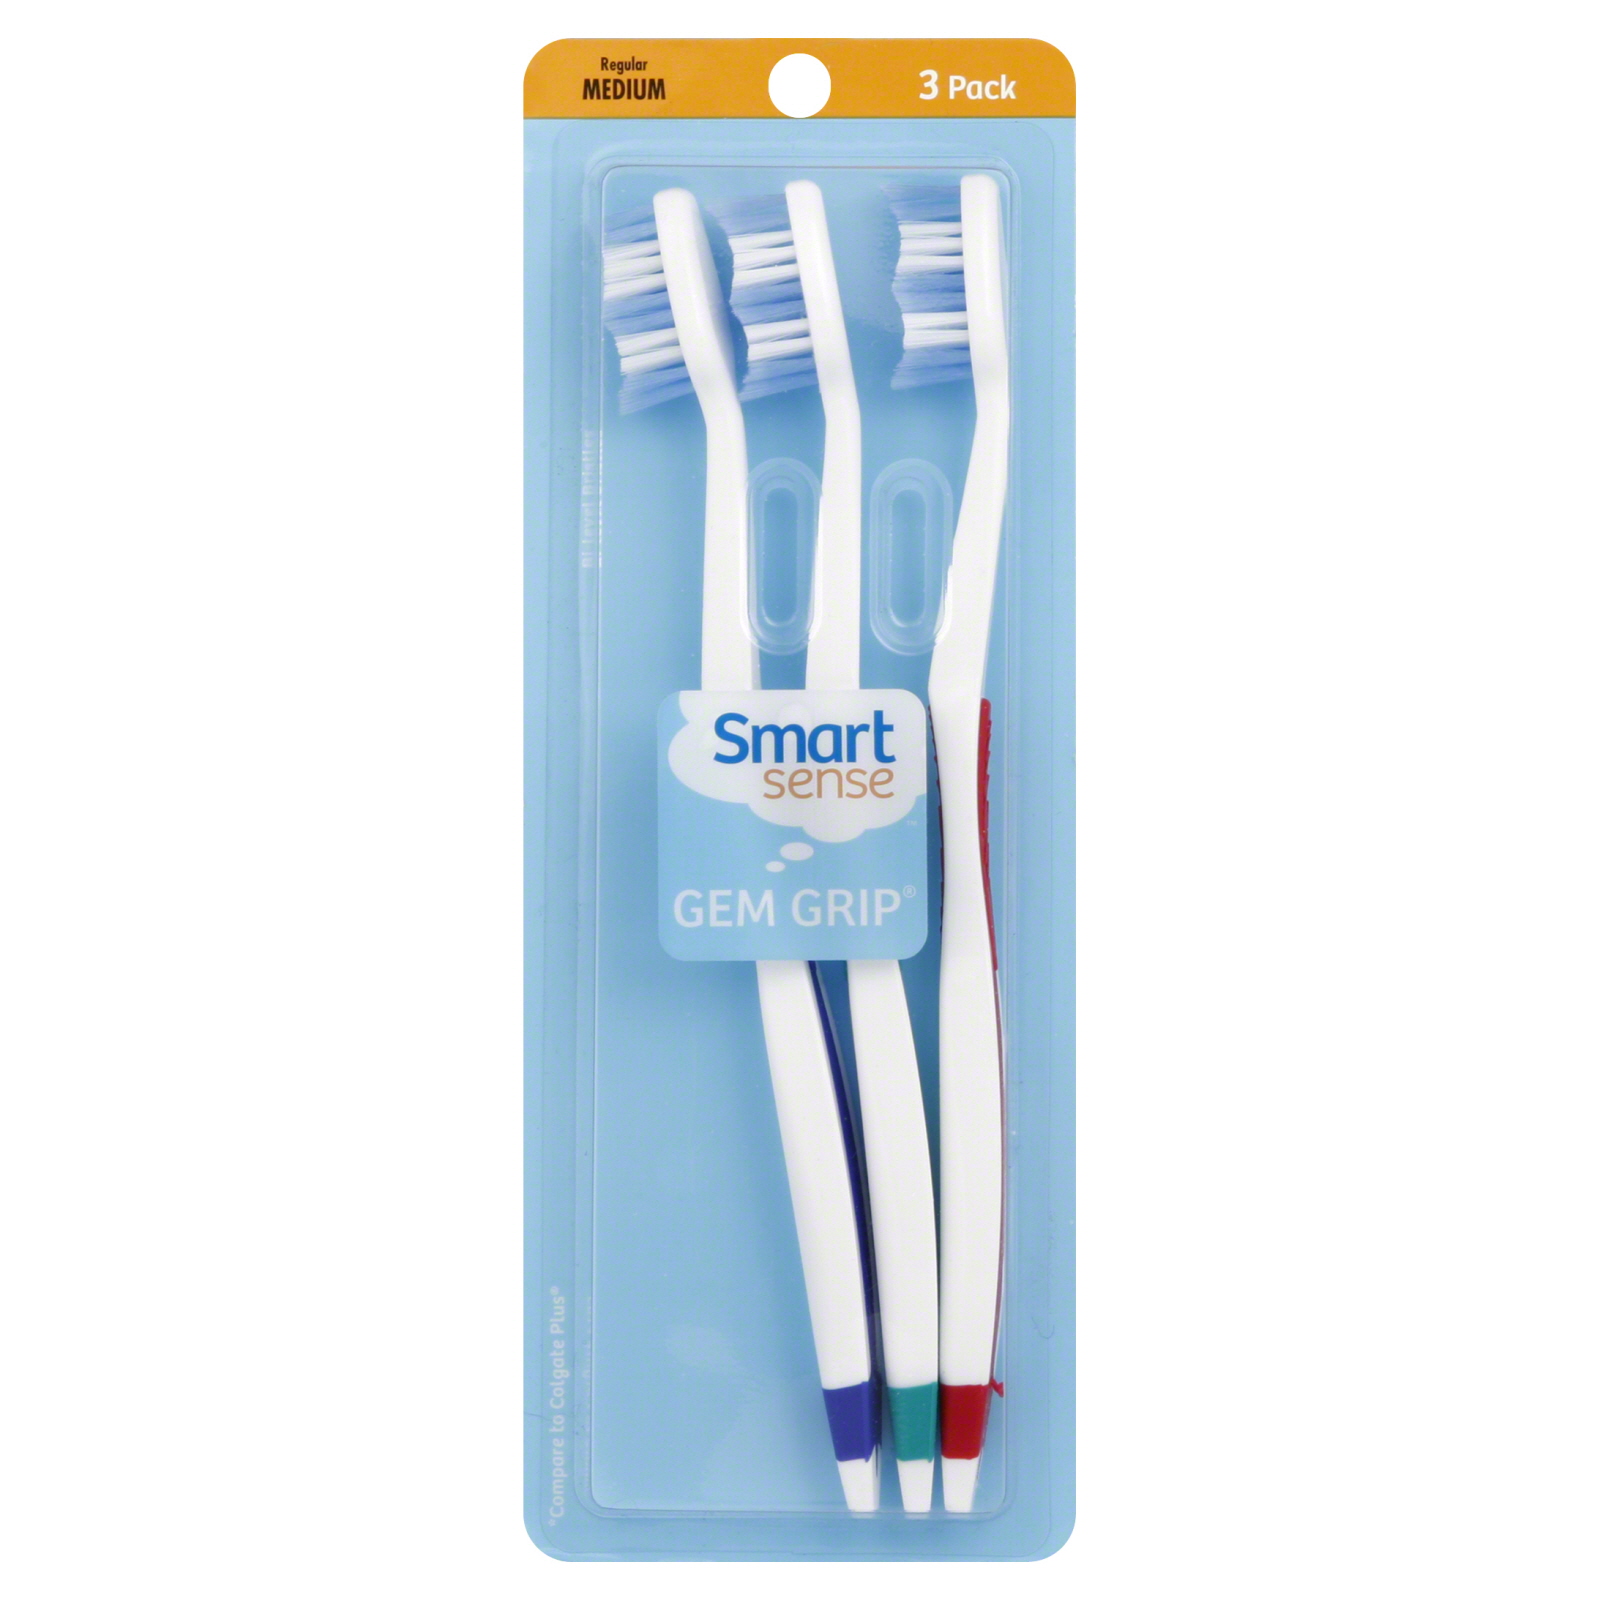 Smart Sense Gem Grip Toothbrushes, Regular, Medium, 3 pack